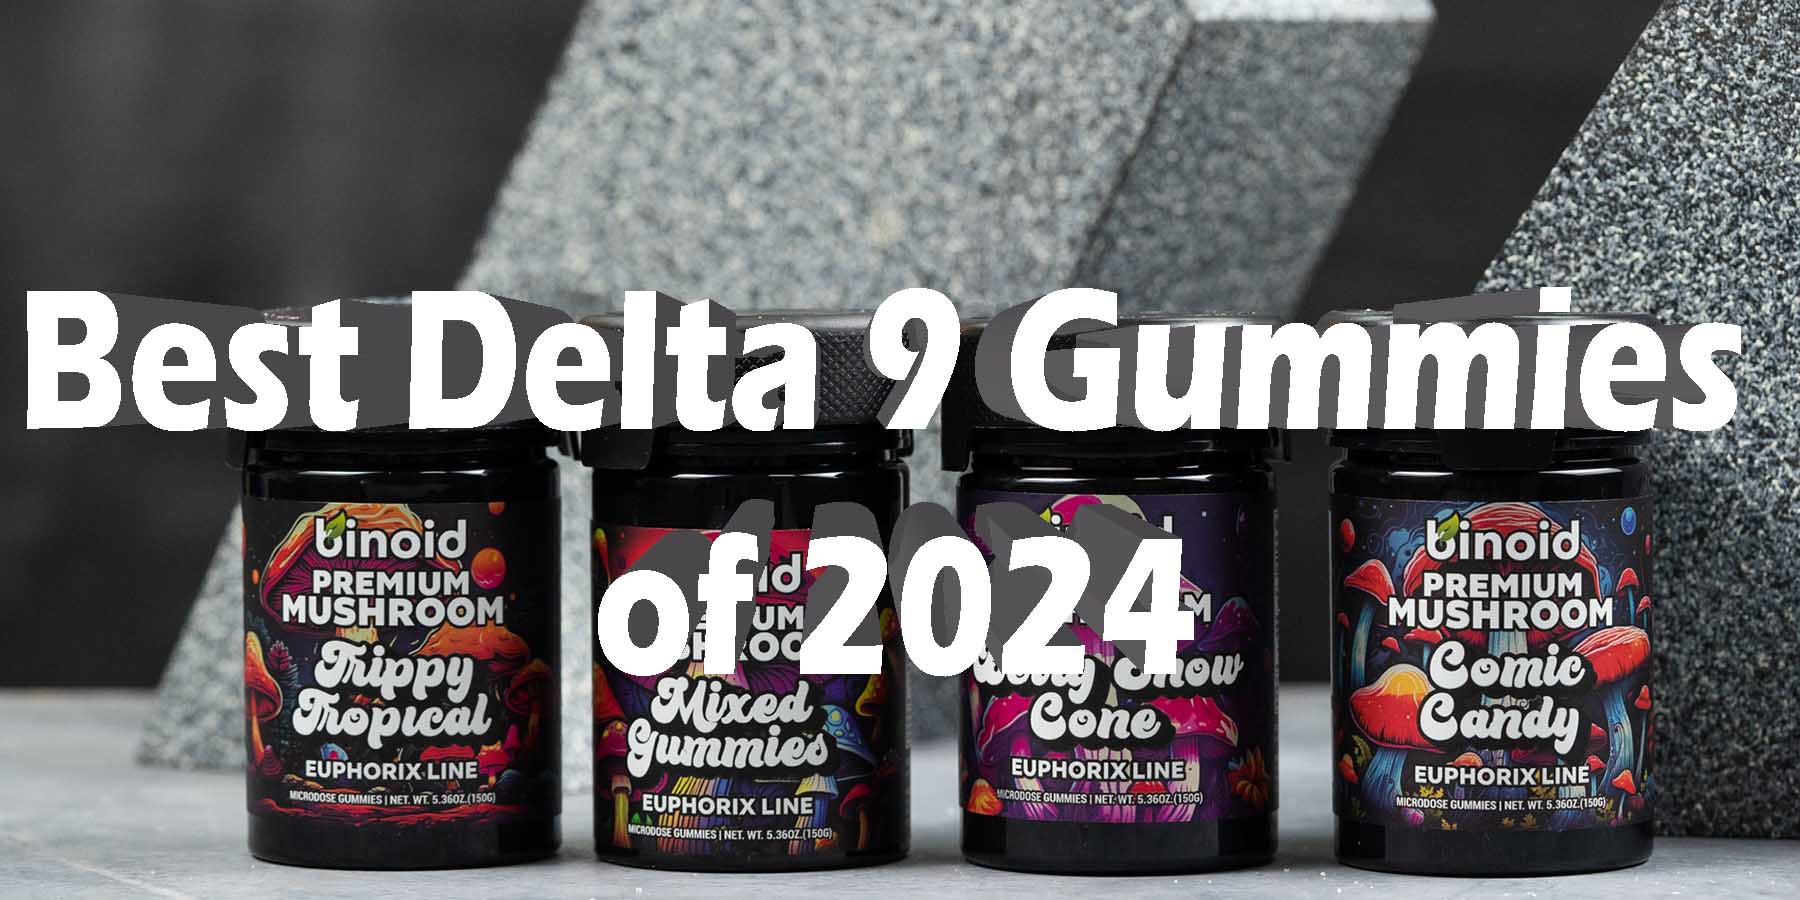 Best Delta 9 Gummies of 2024 GetNearMe LowestCoupon DiscountStore Shoponline VapeCarts Online StrongestSmoke ShopBinoid